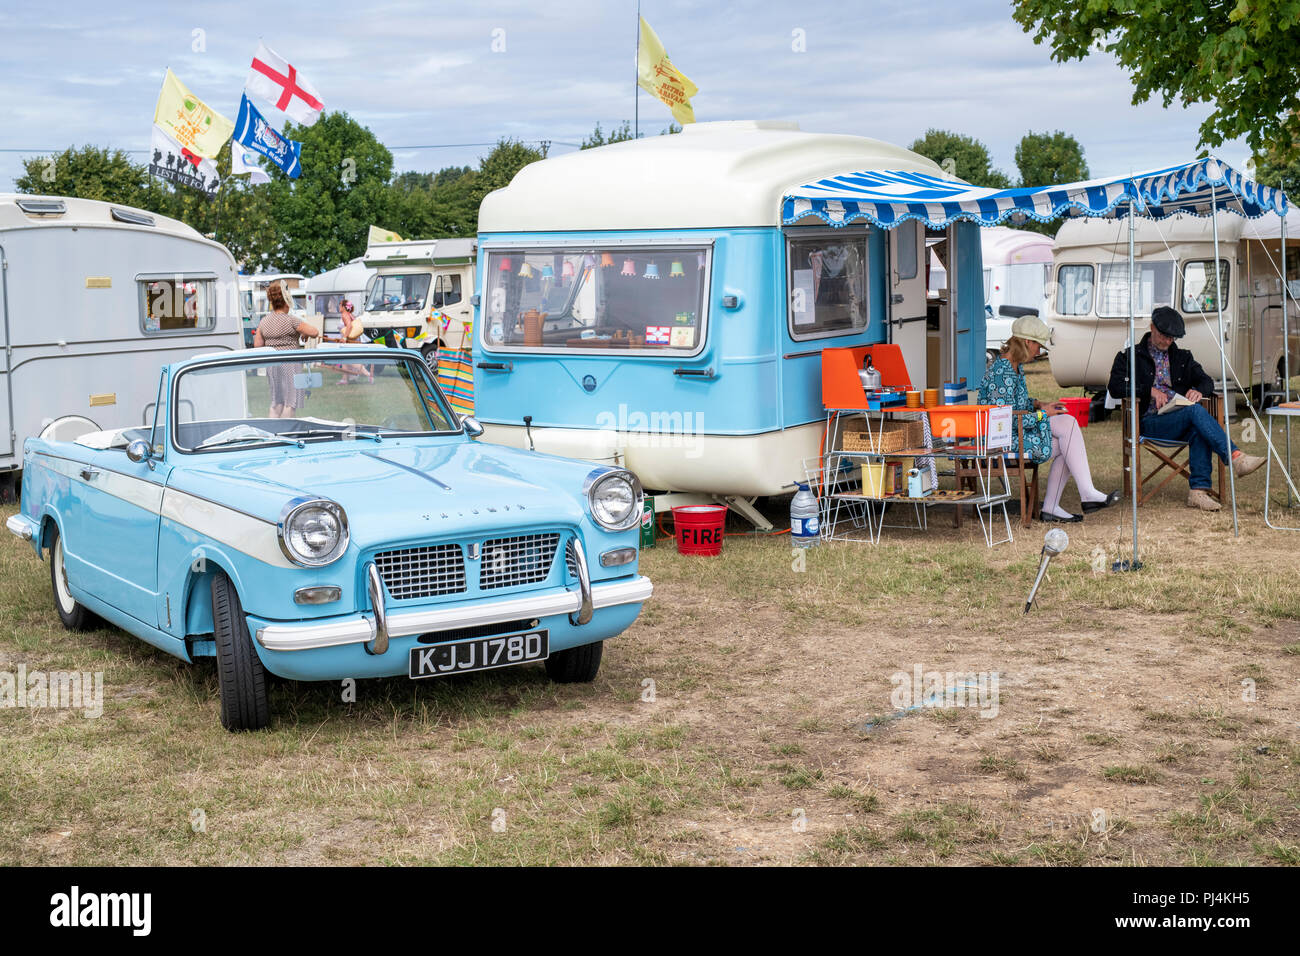 1966 triumph herald 1200 and a vintage caravan at a vintage retro festival. UK Stock Photo